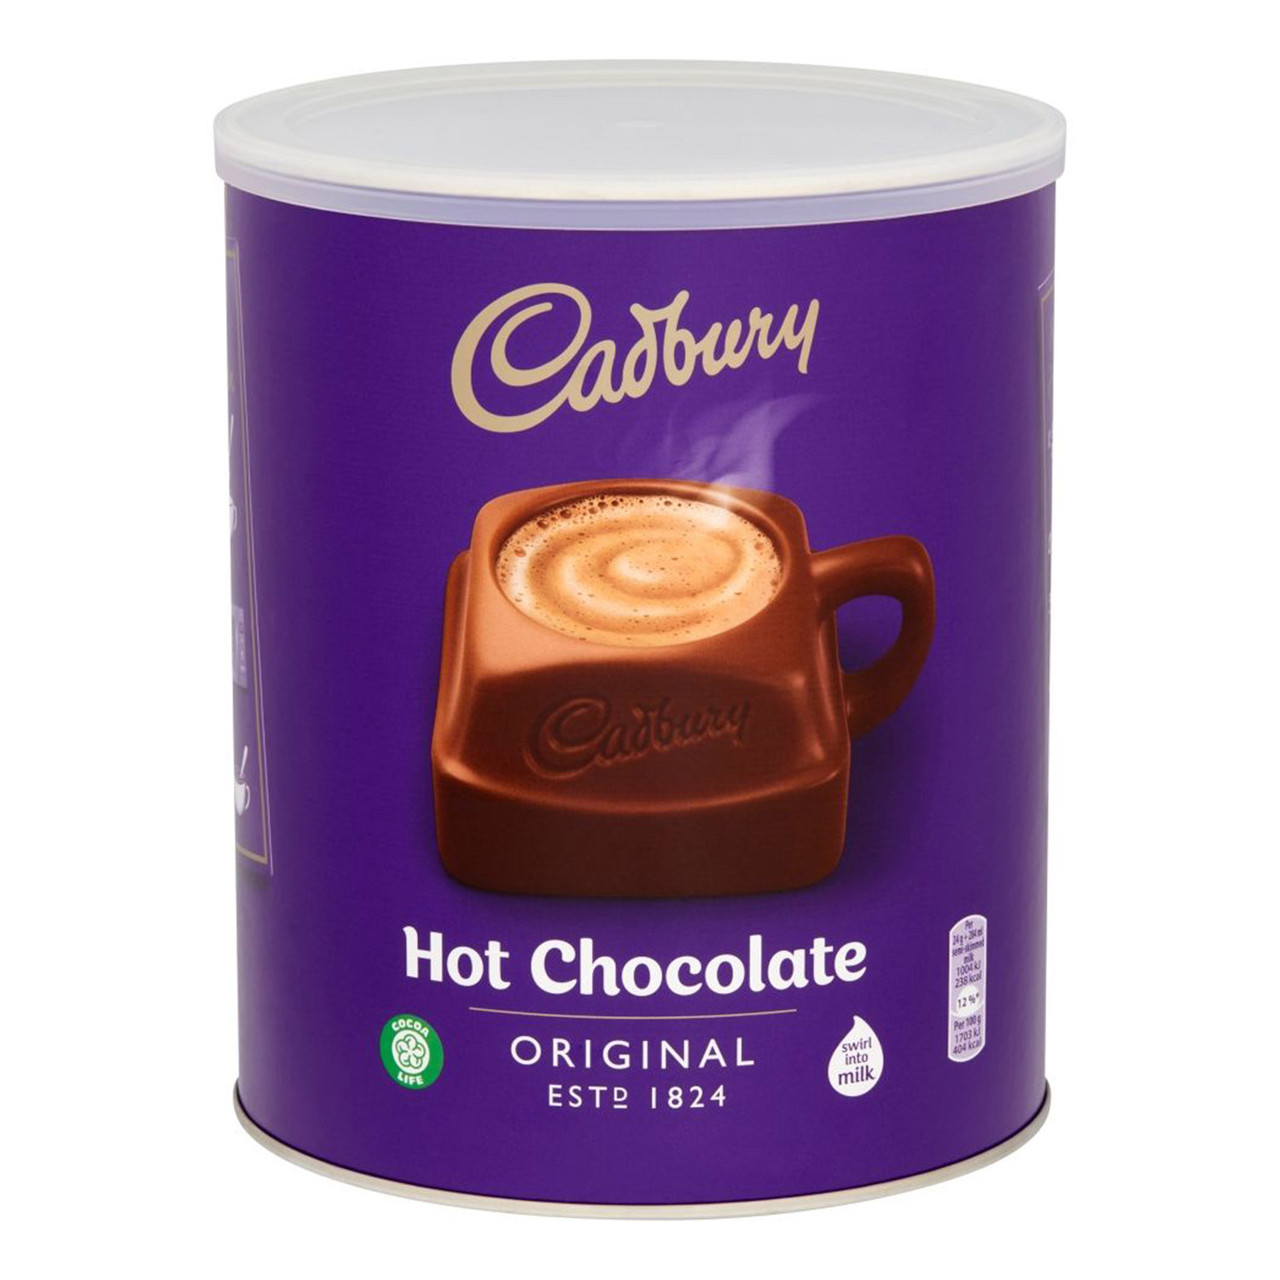 Cadbury Instant Hot Chocolate Large Tub 2Kg